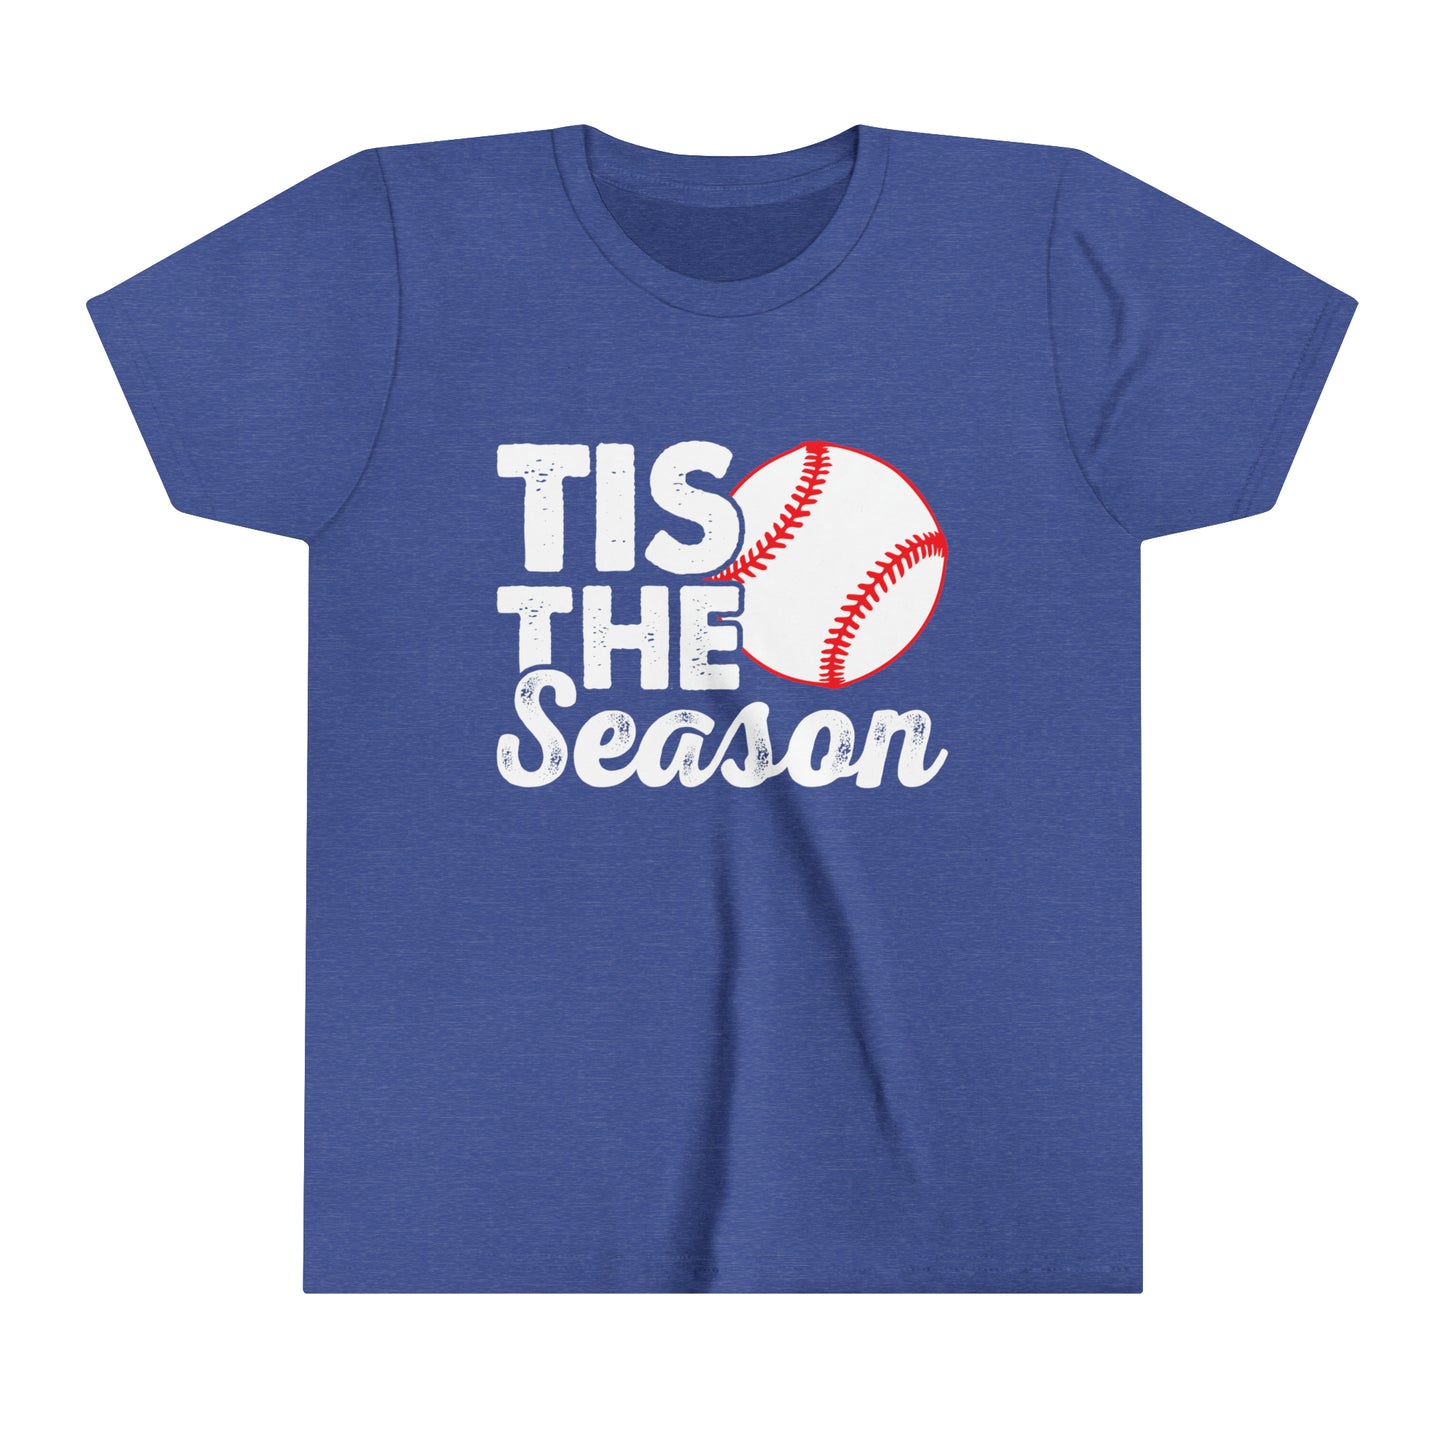 Tis The Season Baseball Boy's Youth Shirt